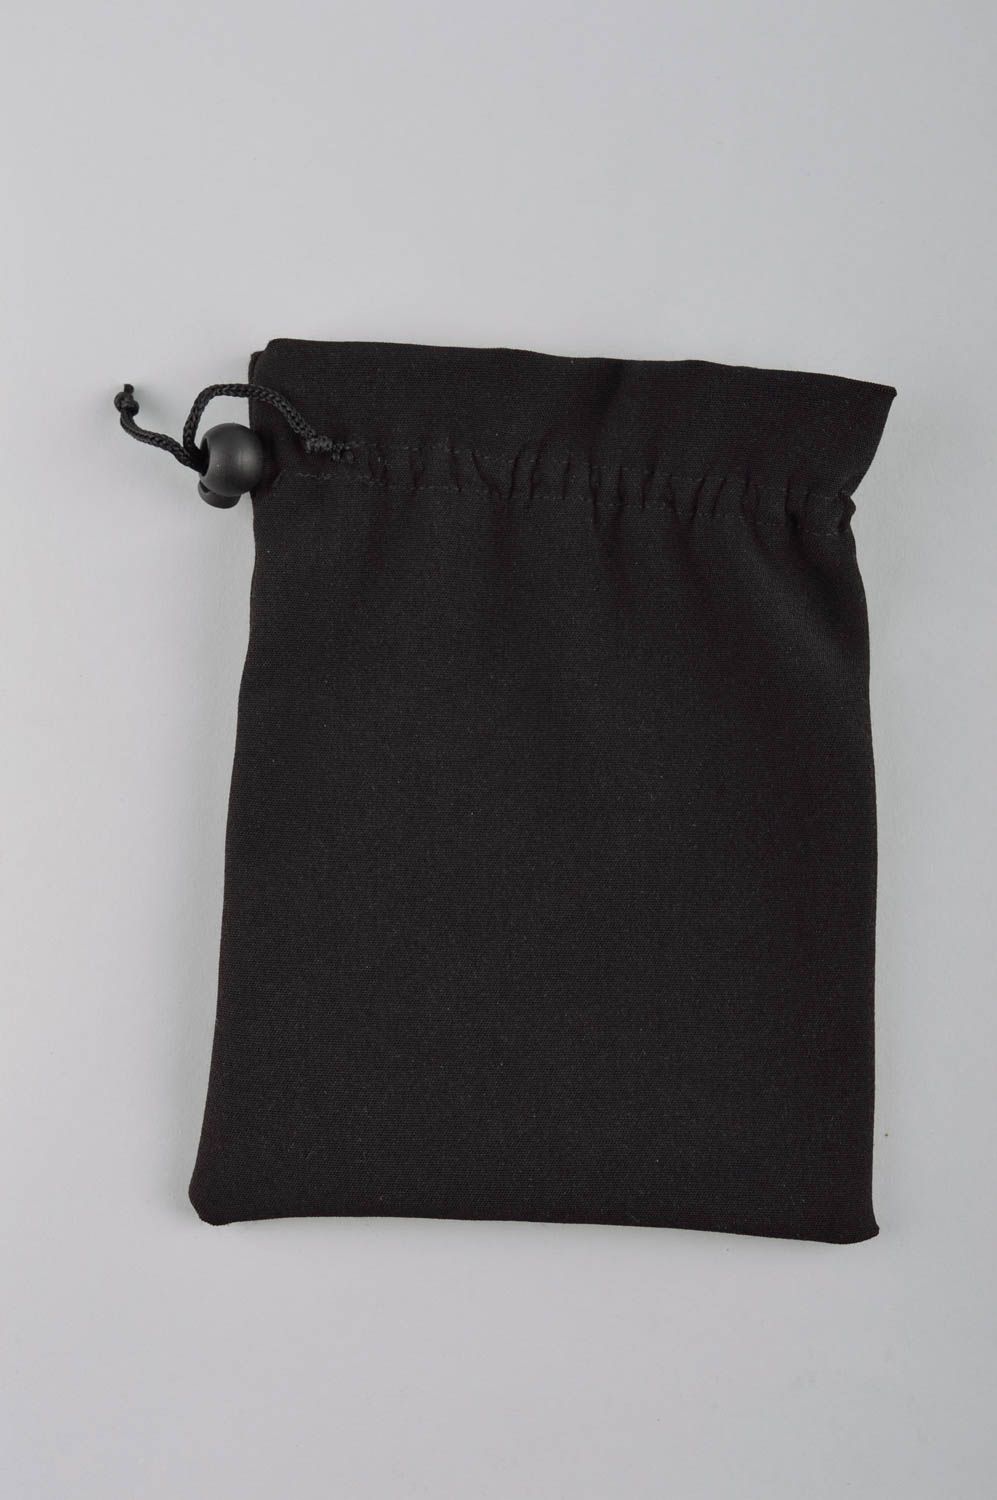 Beautiful handmade textile purse amazing designs womens luxury bags gift ideas photo 3